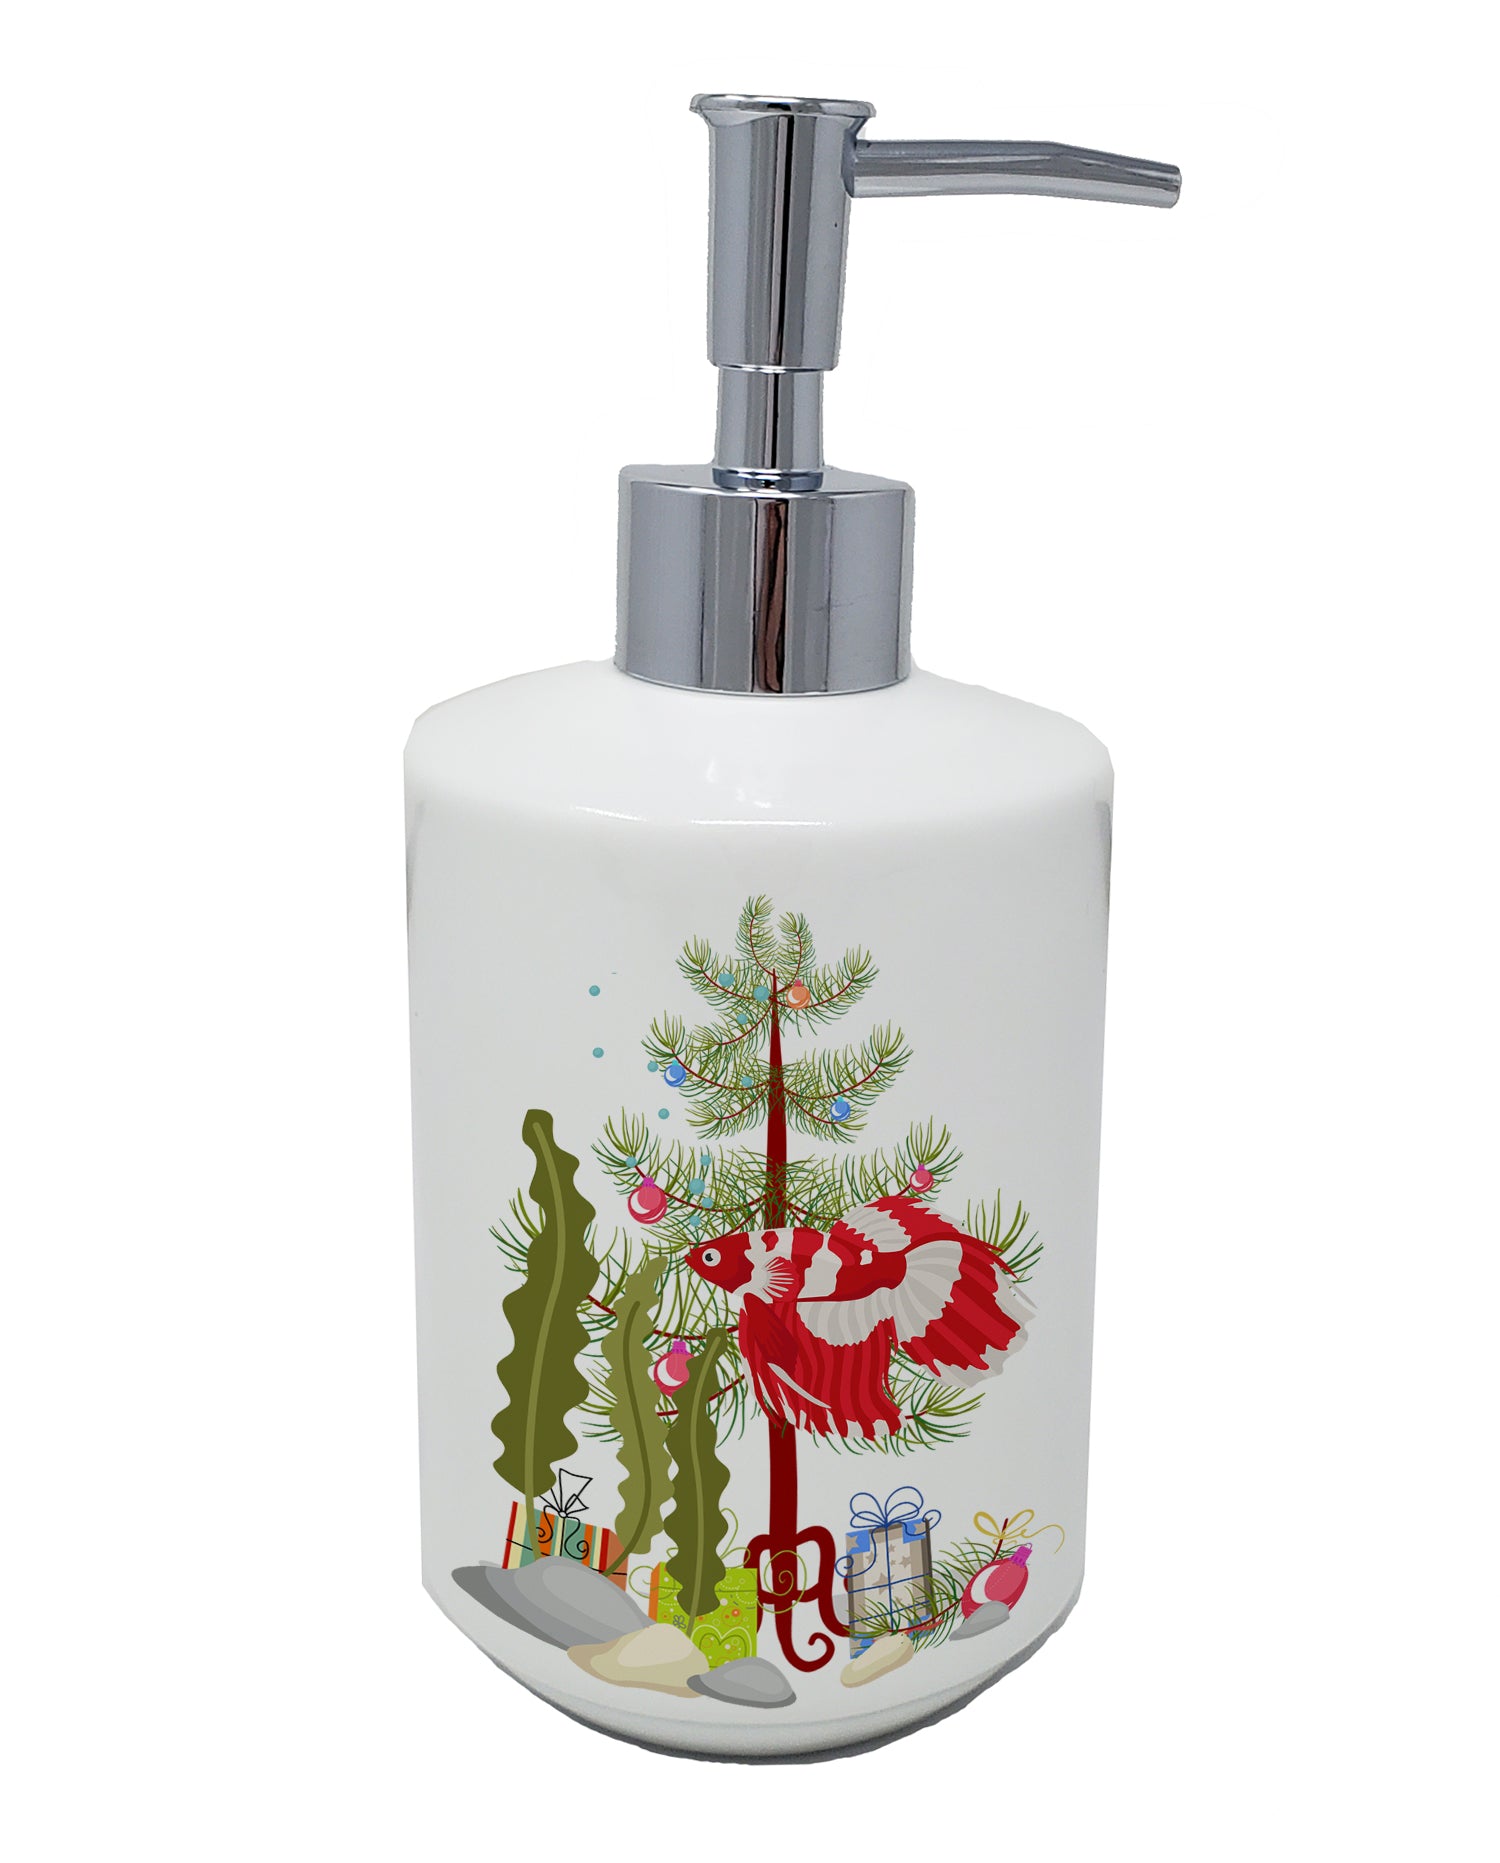 Buy this Veil Tail Betta Merry Christmas Ceramic Soap Dispenser